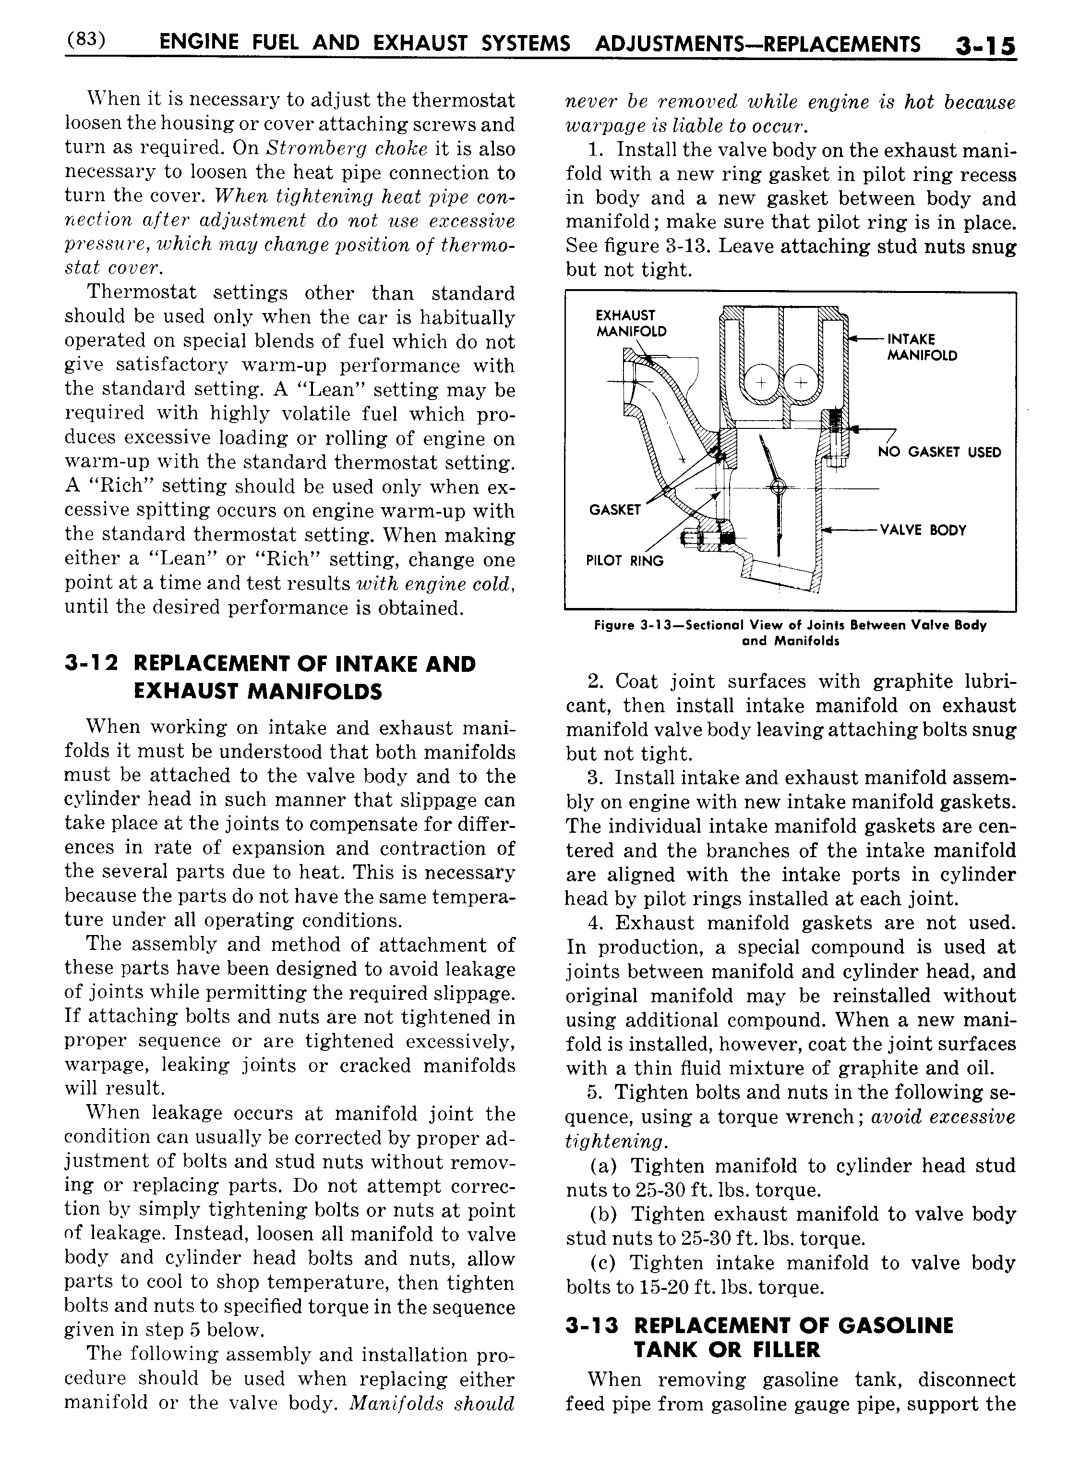 n_04 1951 Buick Shop Manual - Engine Fuel & Exhaust-015-015.jpg